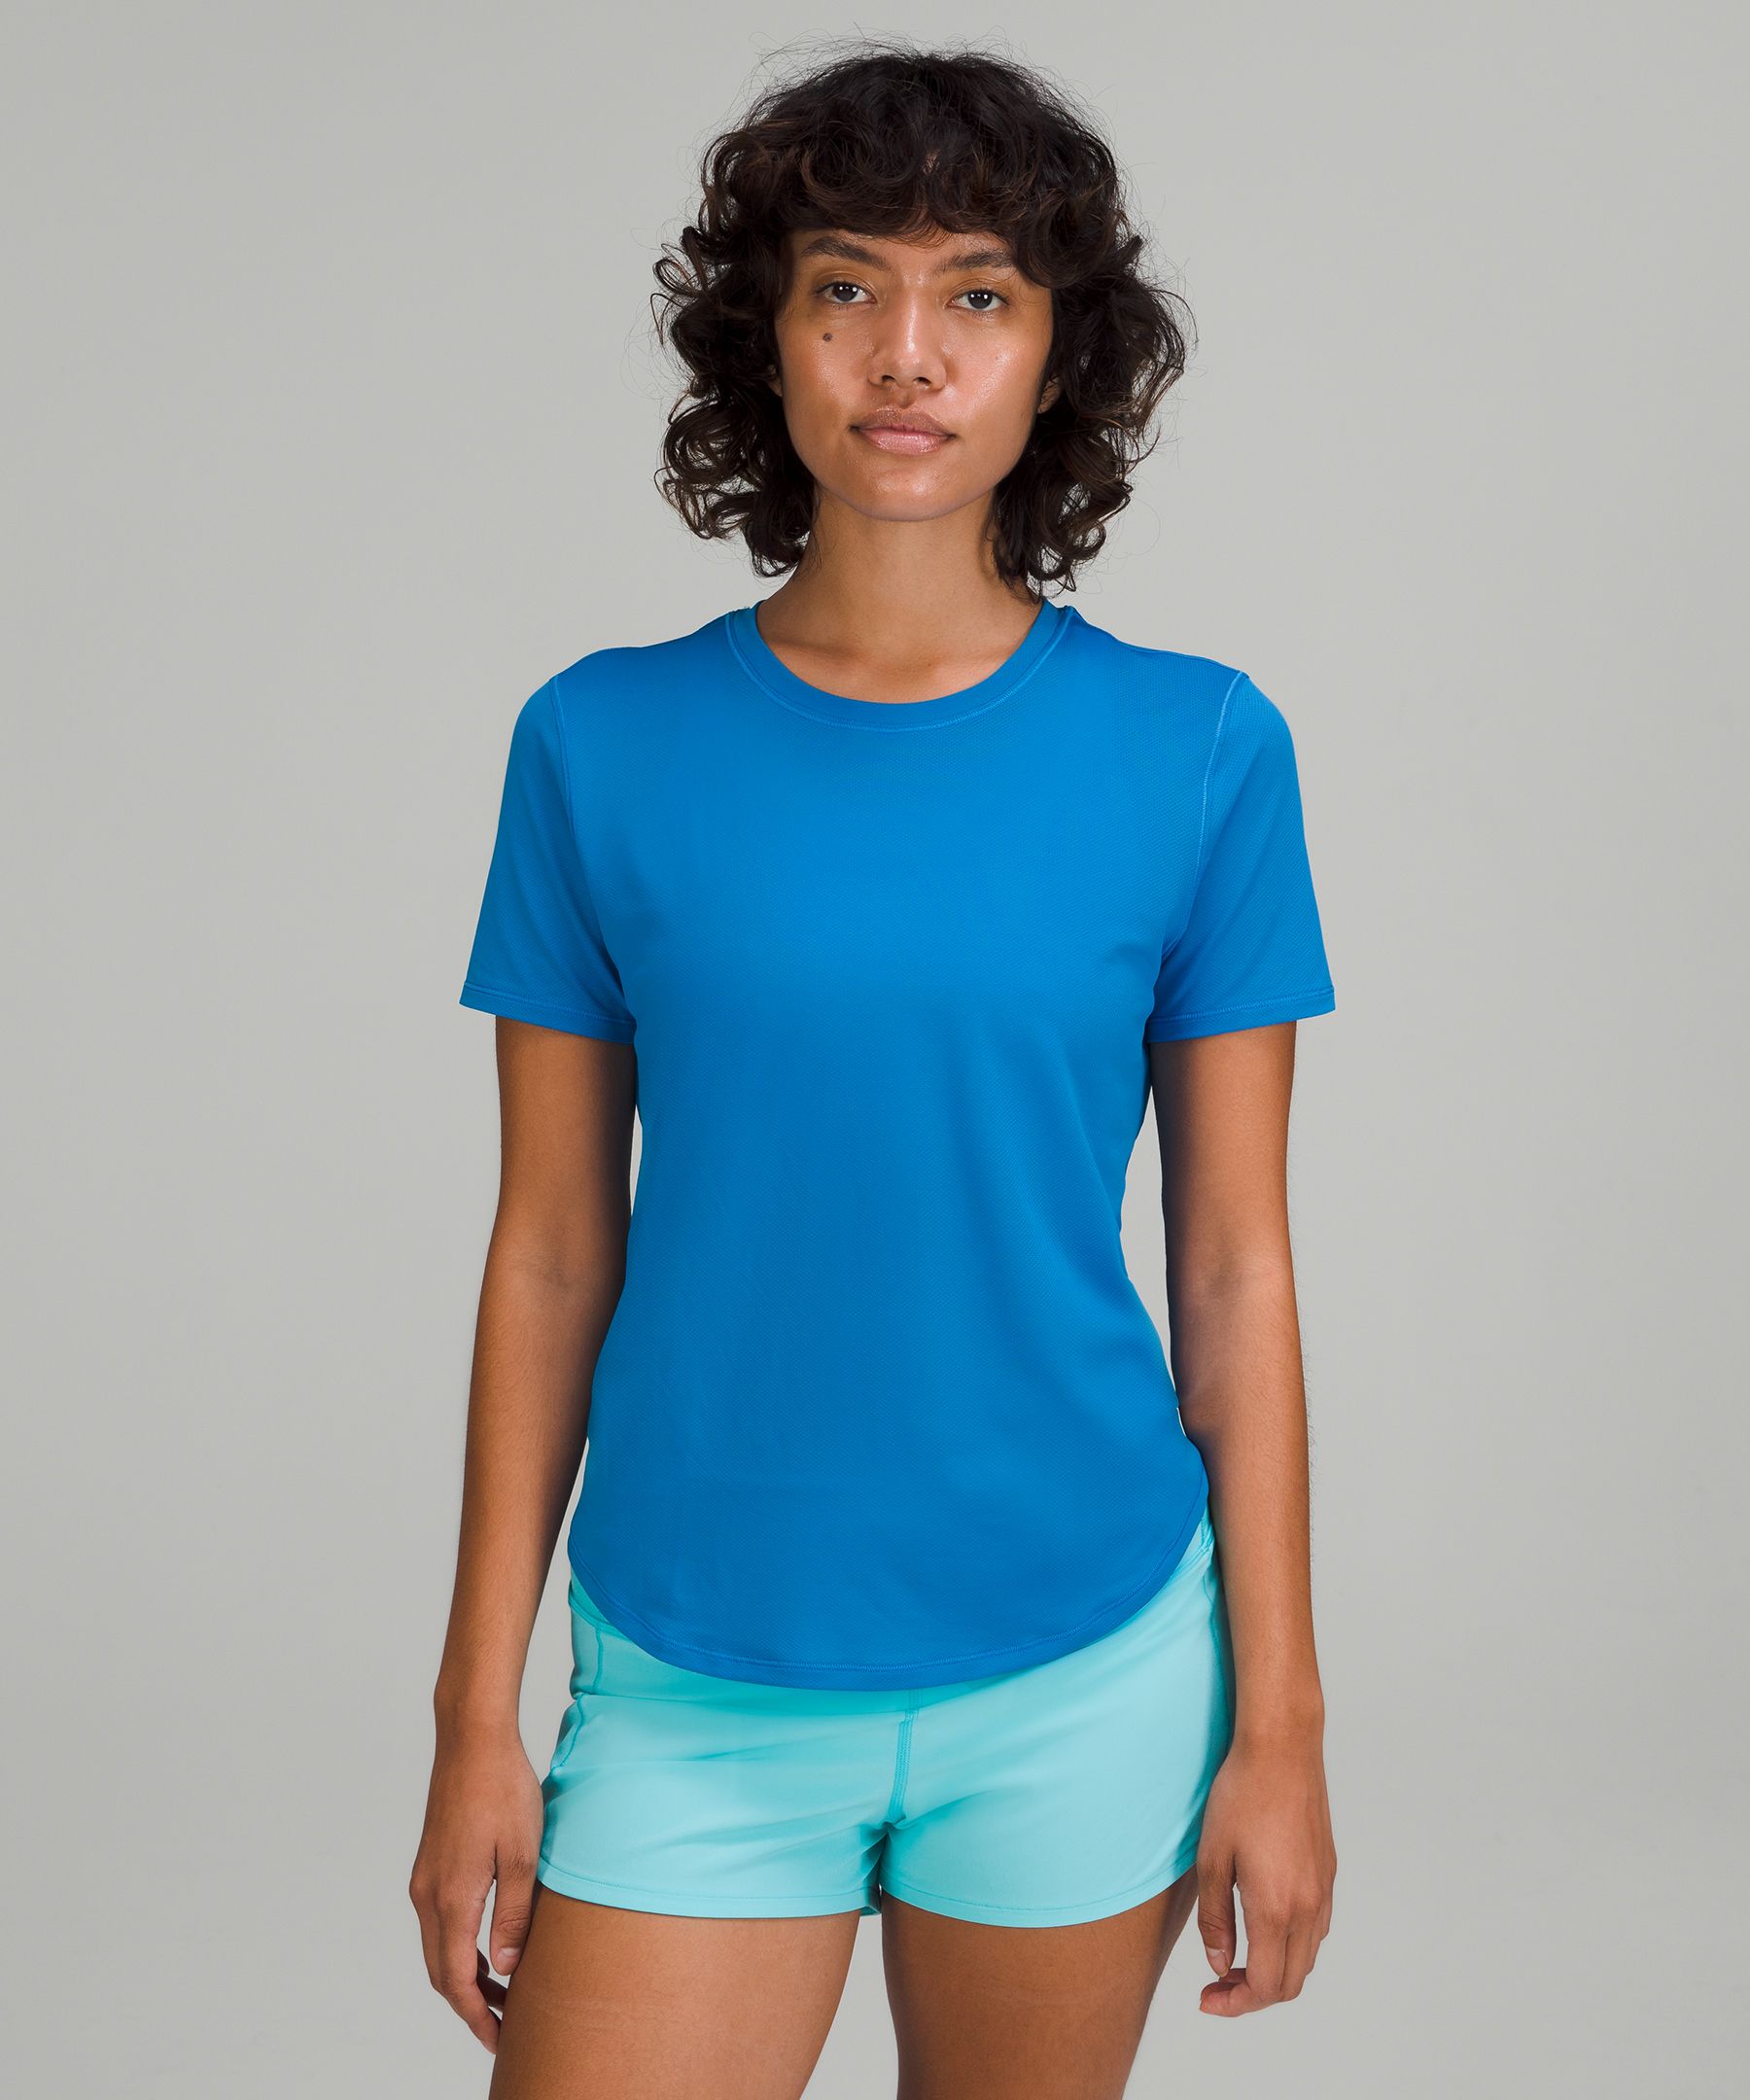 Lululemon High-Neck Running and Training T-Shirt - Heritage 365